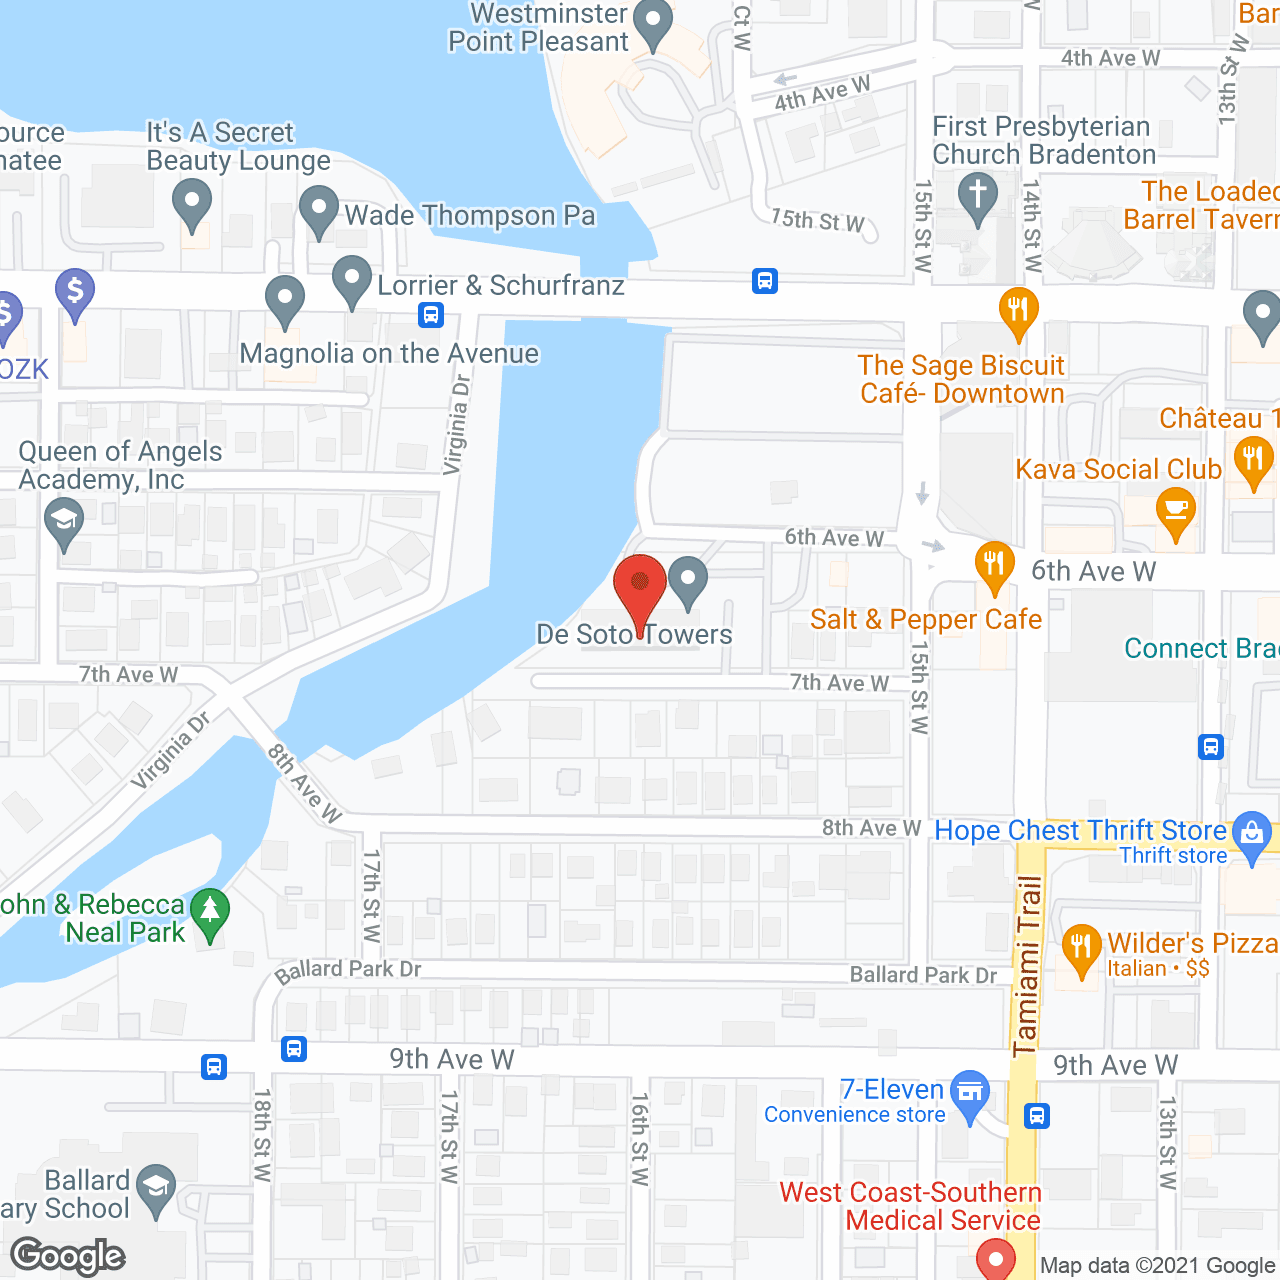 De Soto Towers Inc in google map